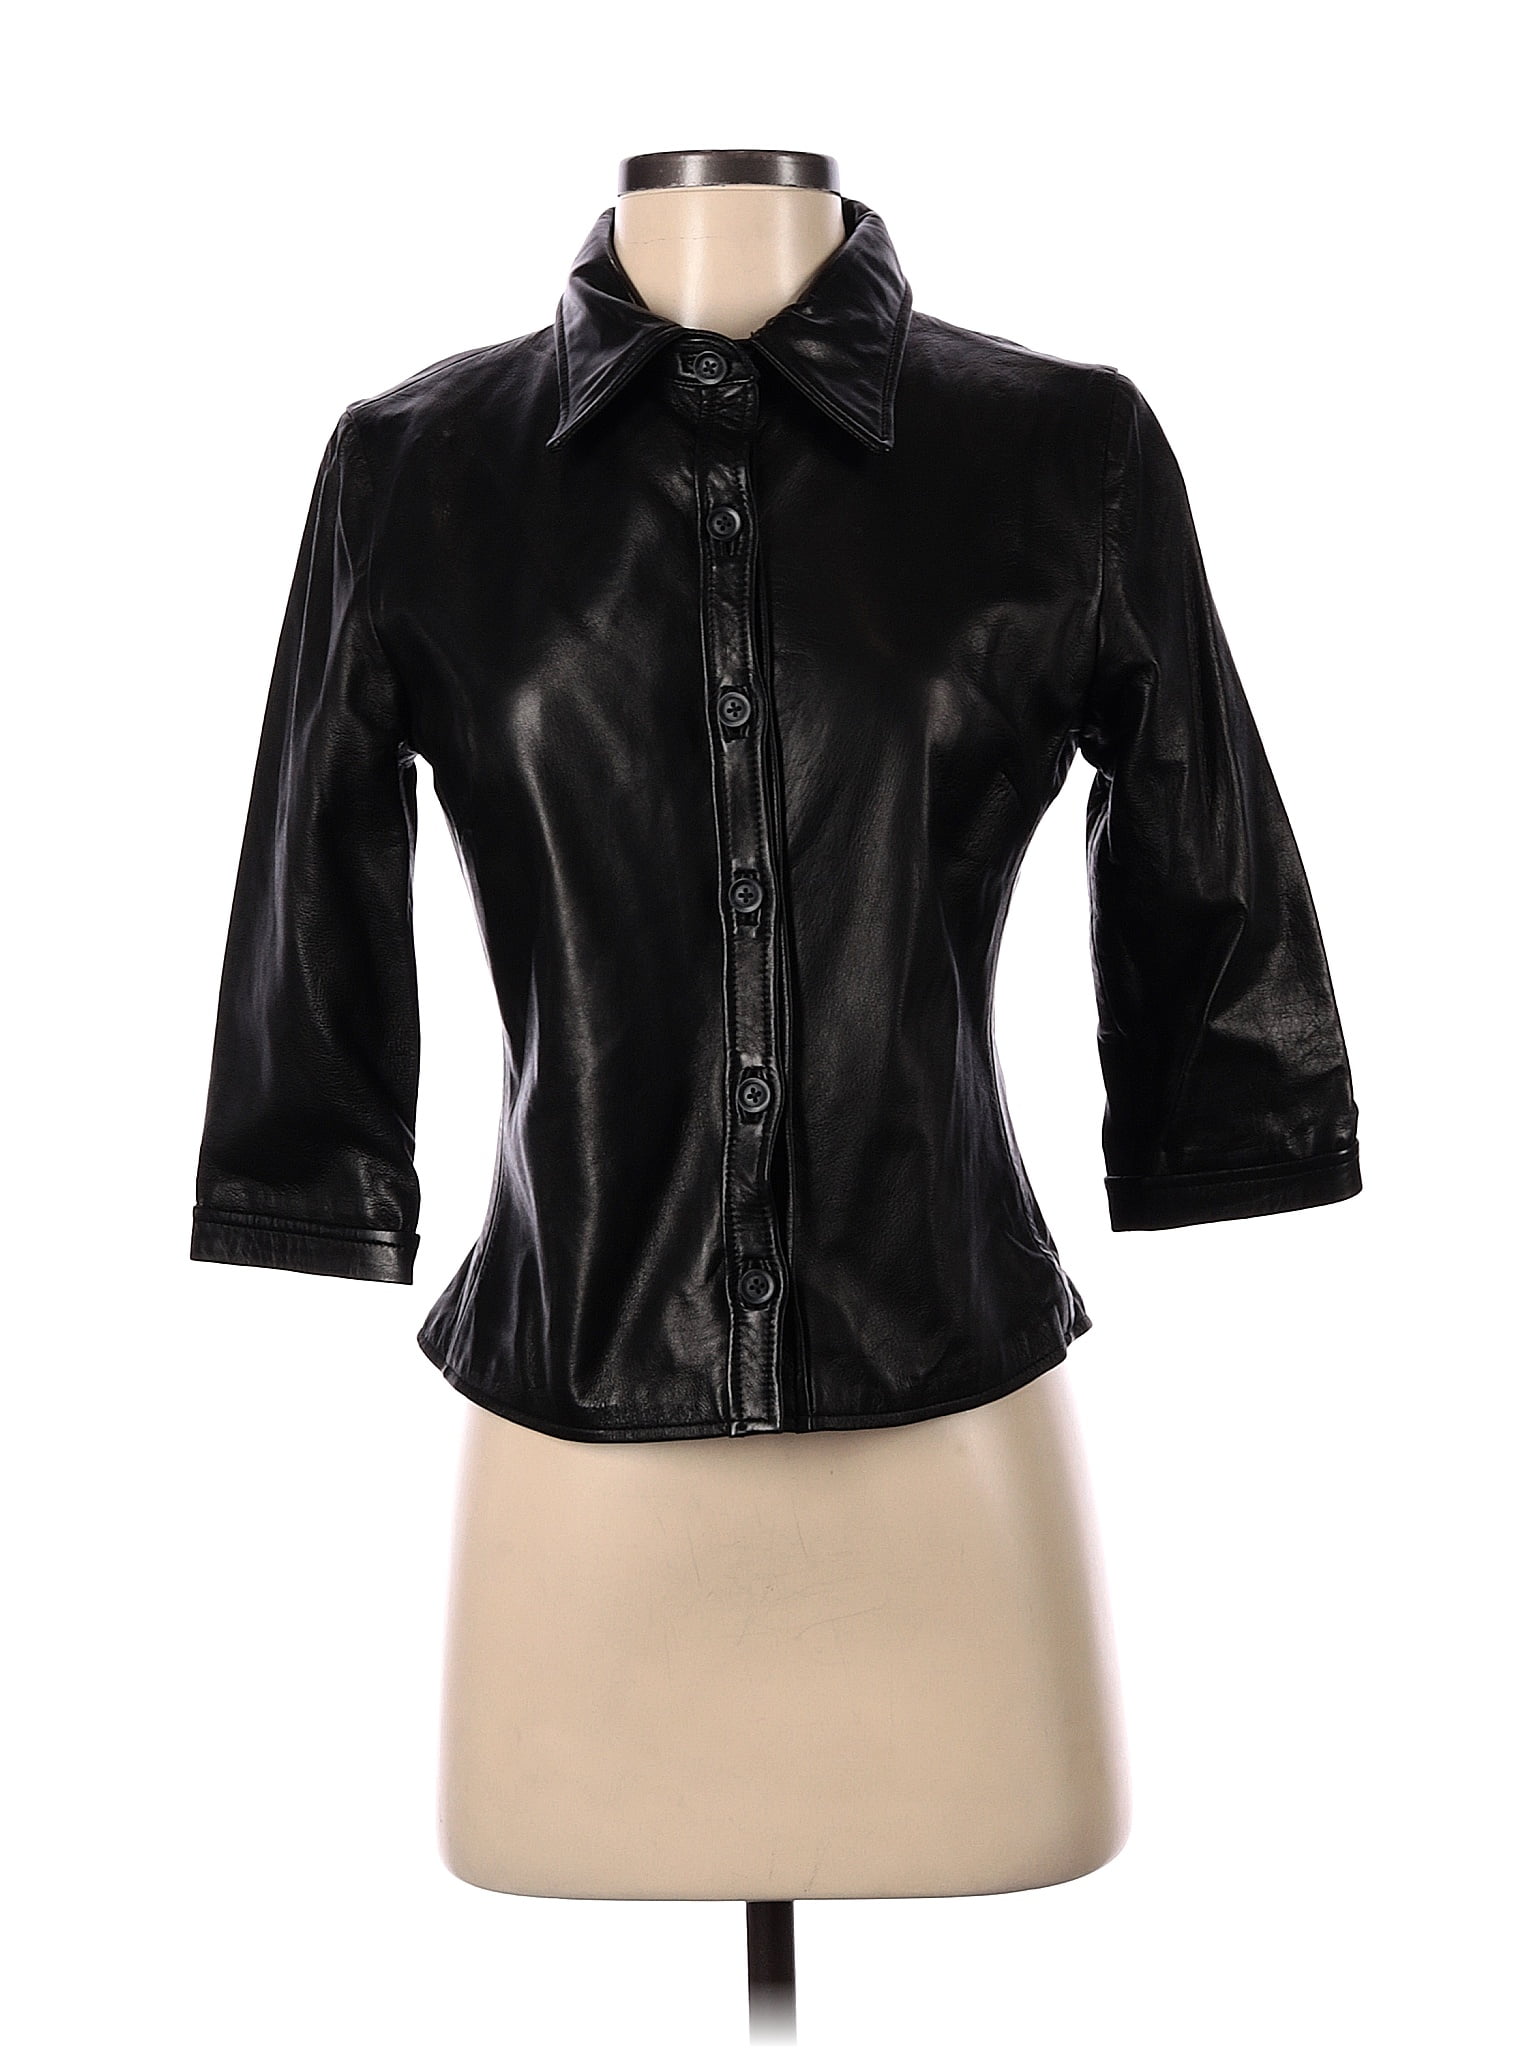 Hannah 100% Leather Solid Black Leather Jacket Size 4 - 42% off | thredUP